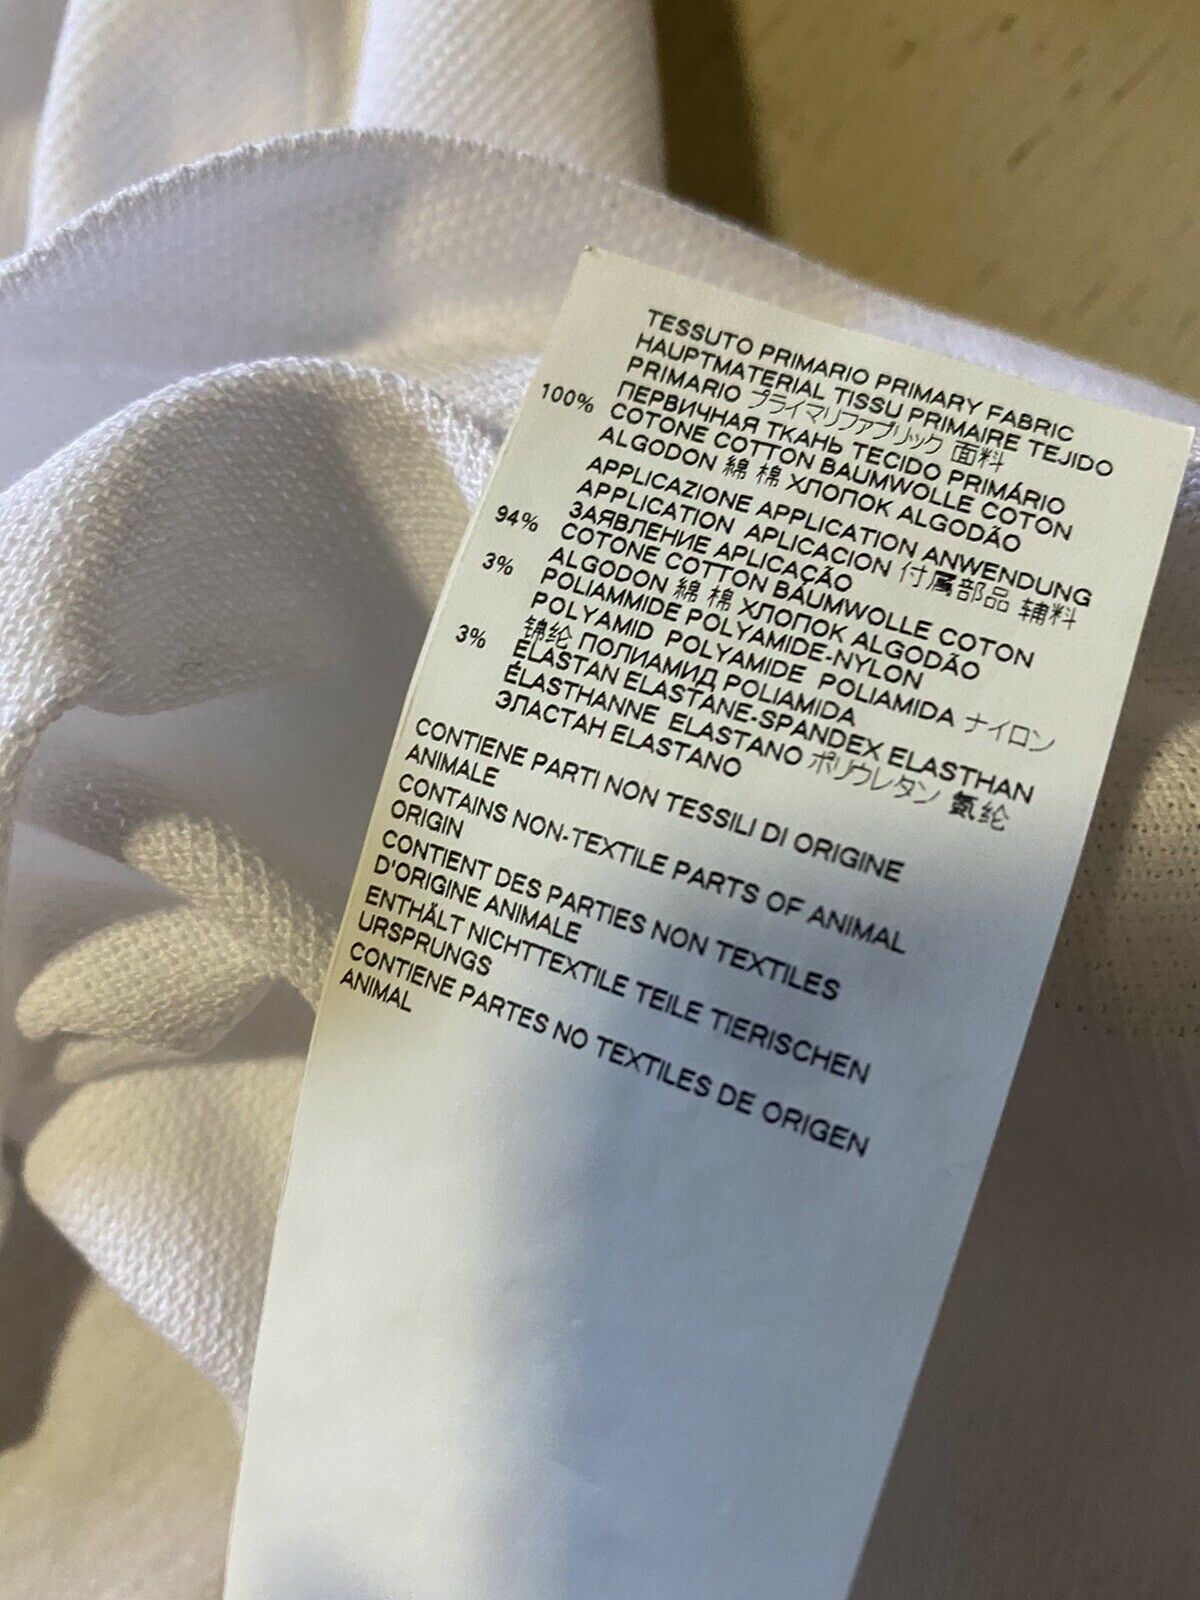 Мужская рубашка-поло Dsquared2, белая XS, Италия, NWT 375 долларов США